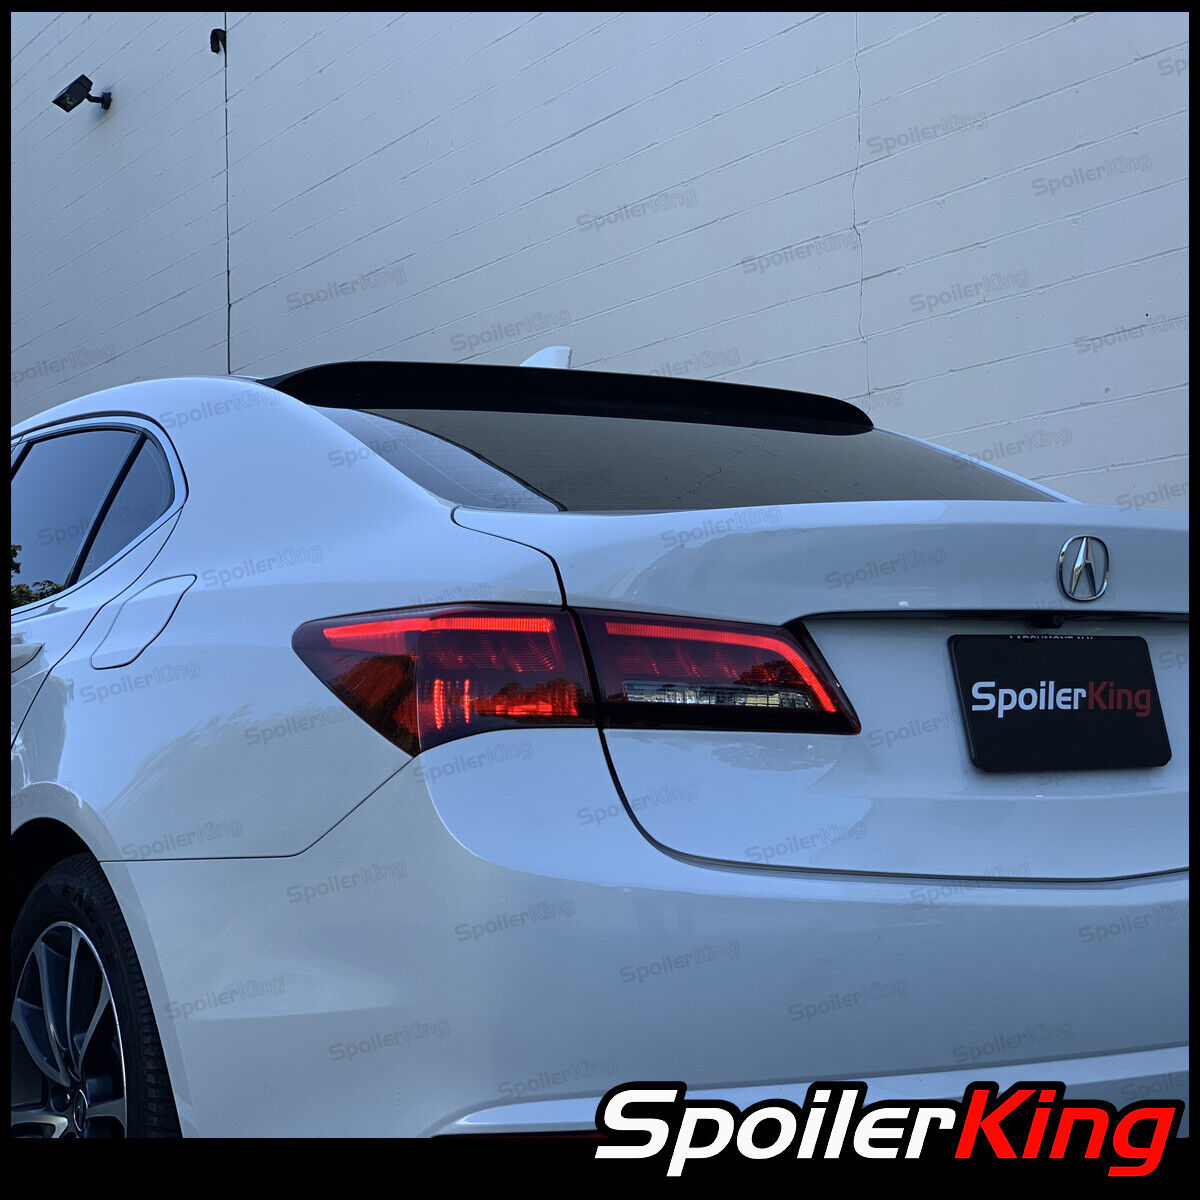 SpoilerKing Rear Roof Window Spoiler Fits: Acura TLX 2015-2020 (380R)